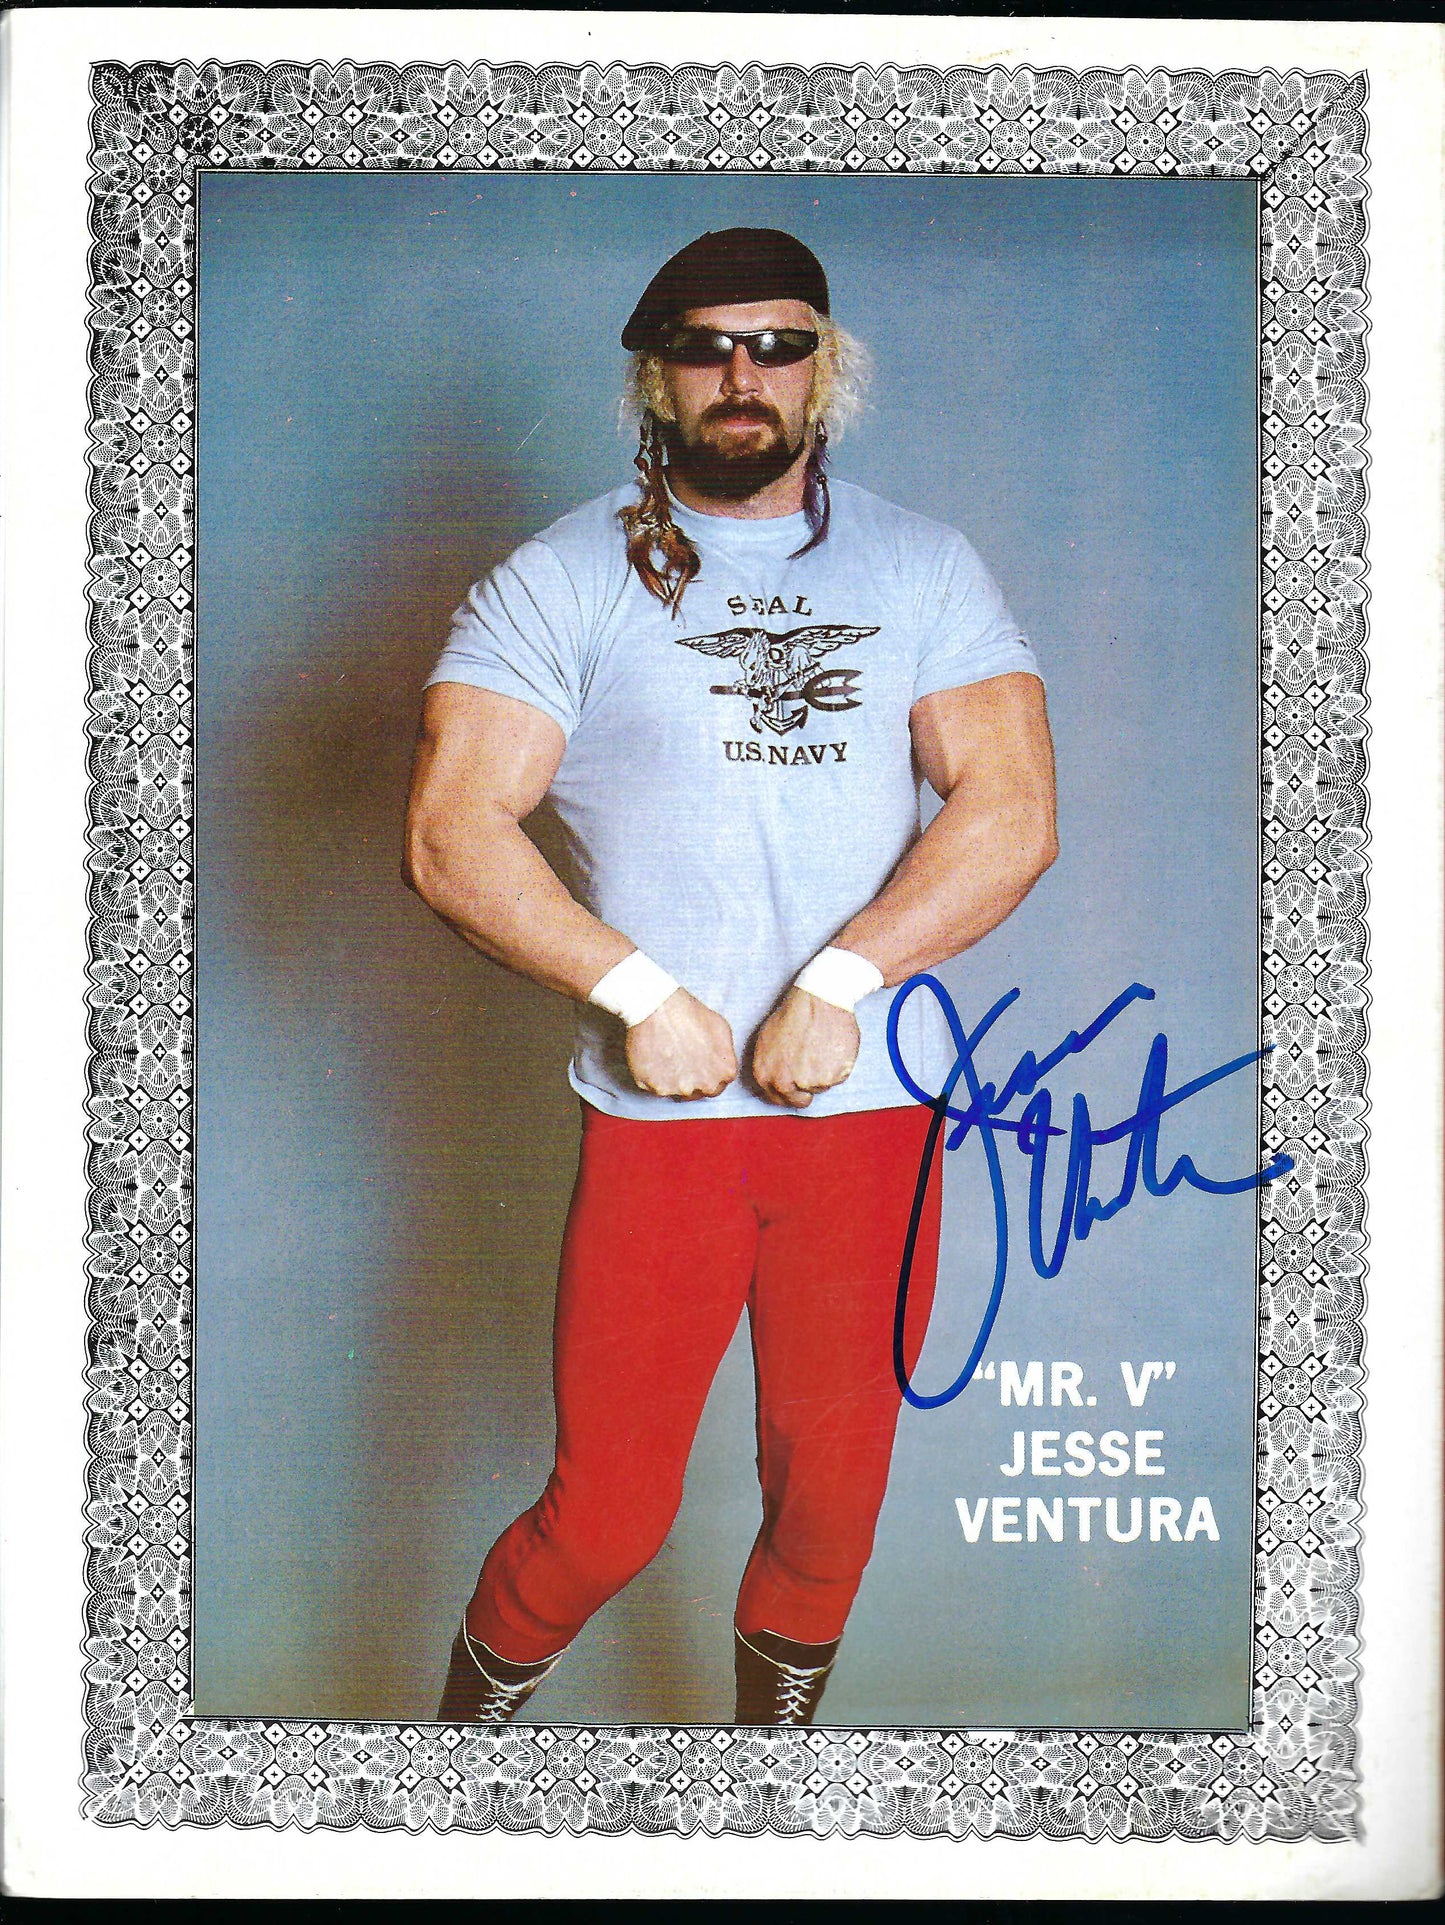 AM847 Rick Martel Jesse the Body Ventura  VERY RARE Autographed Vintage Wrestling Magazine w/COA